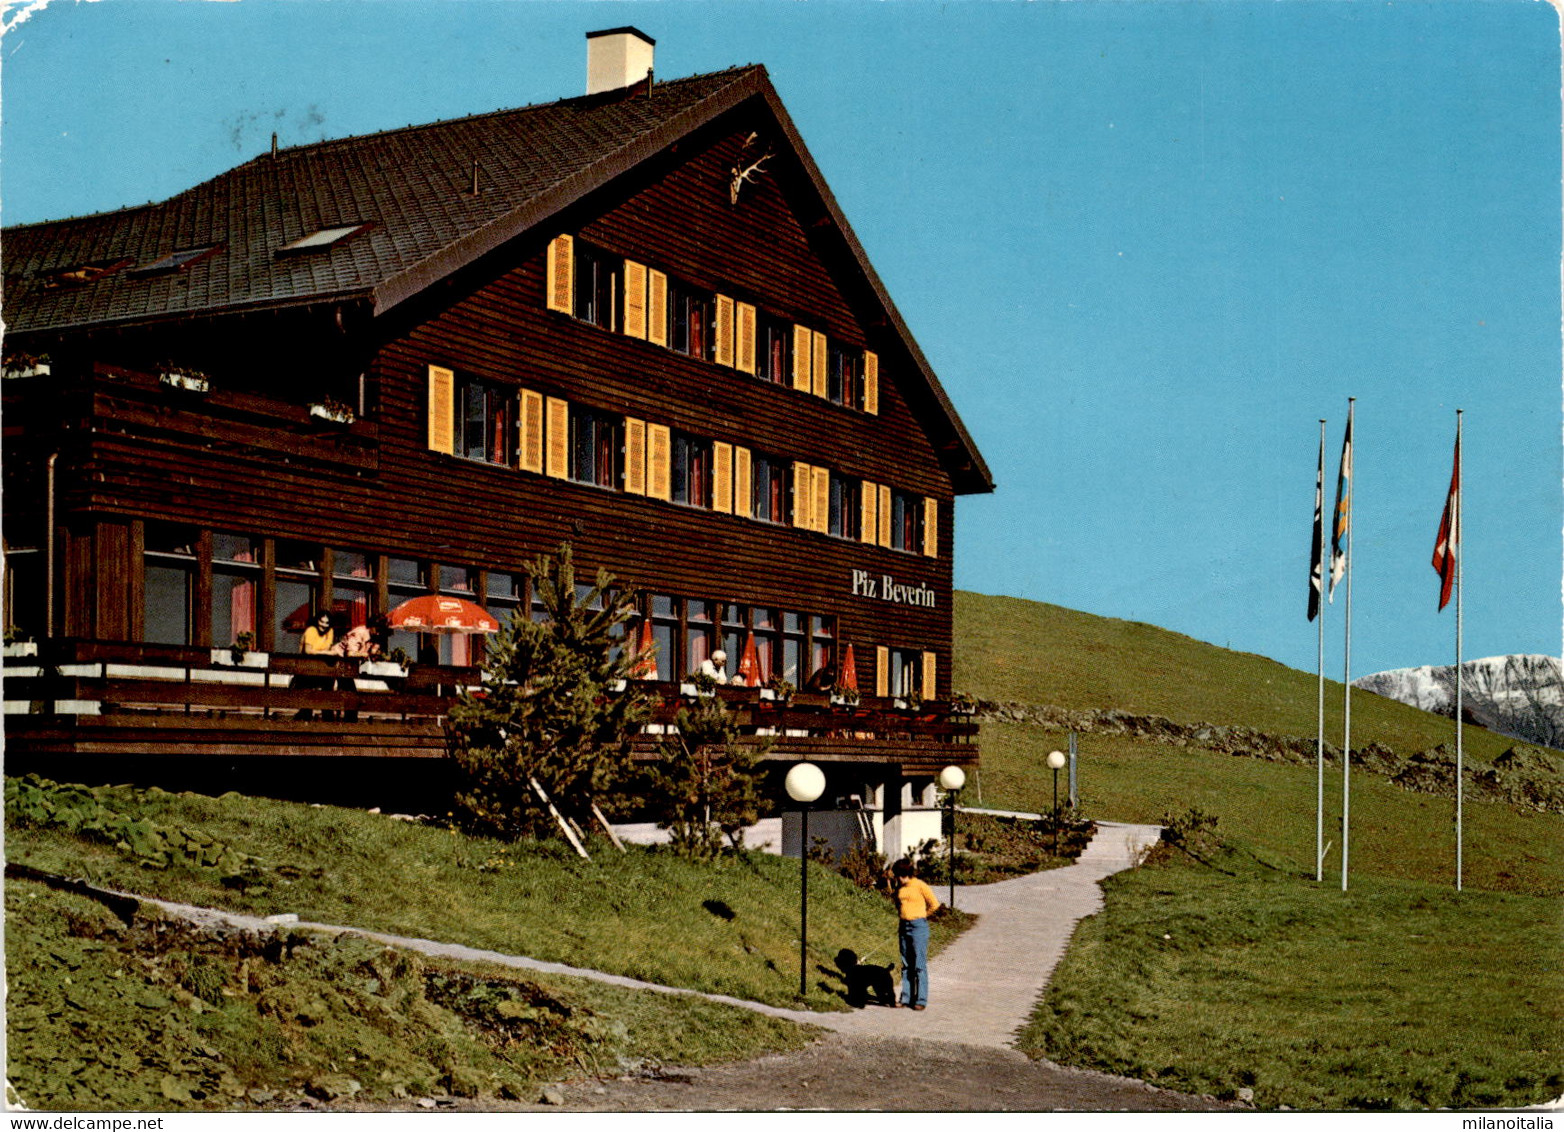 Langnauer-Ferienhaus "Piz Beverin" - Obertschappina Am Heinzenberg (7364) * 9. 7. 1980 - Bever